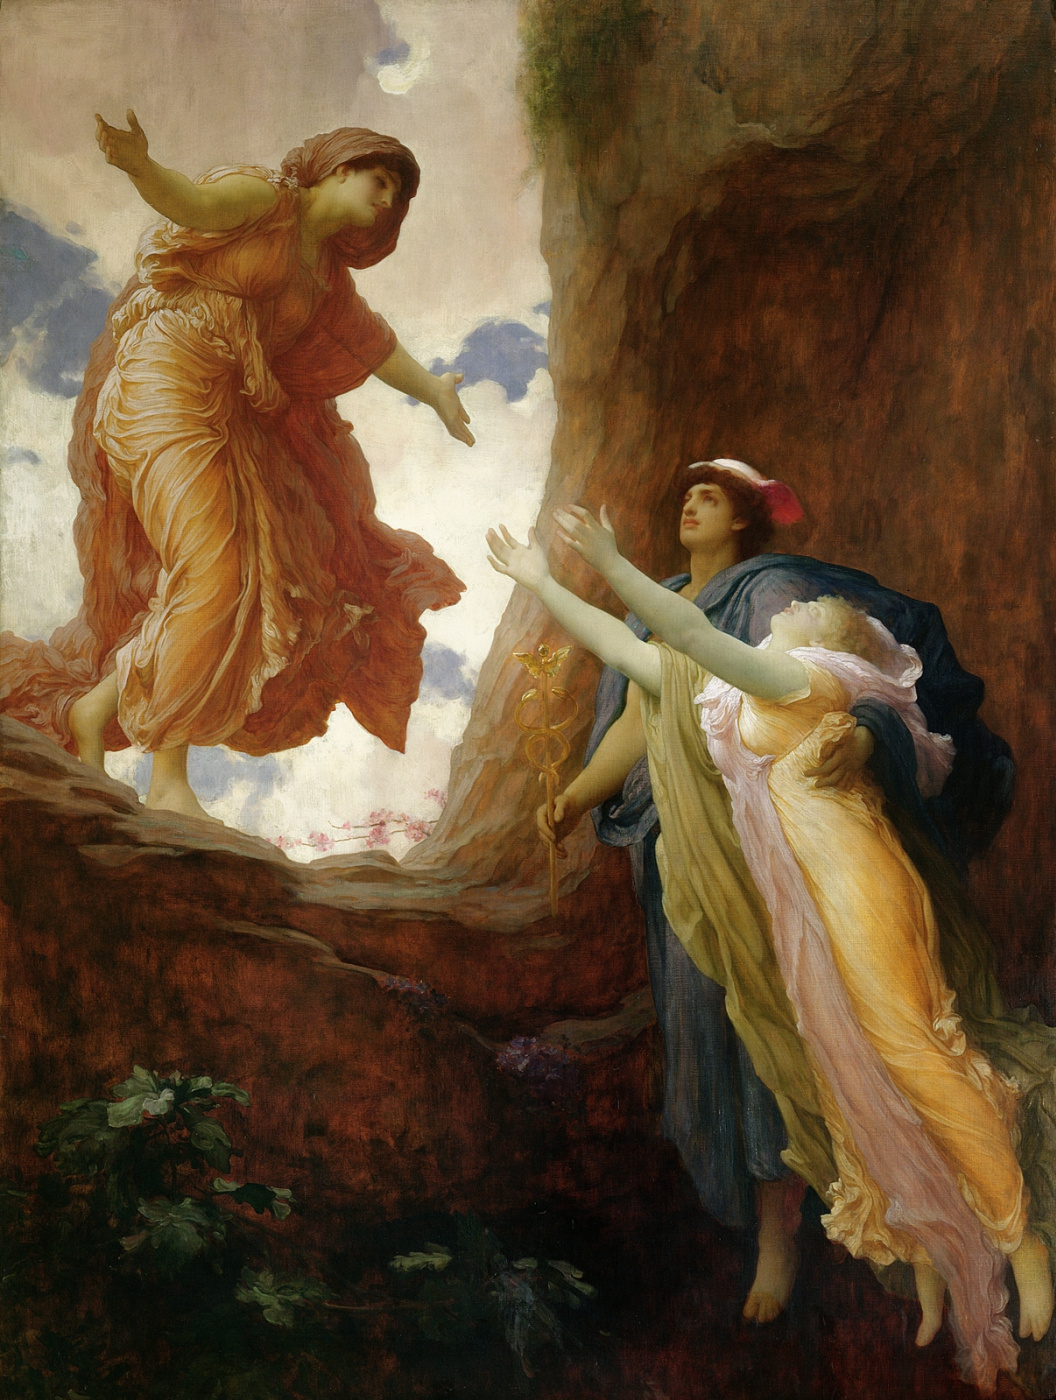 Frederic_Leighton_-_The_Return_of_Persephone_1891.jpg